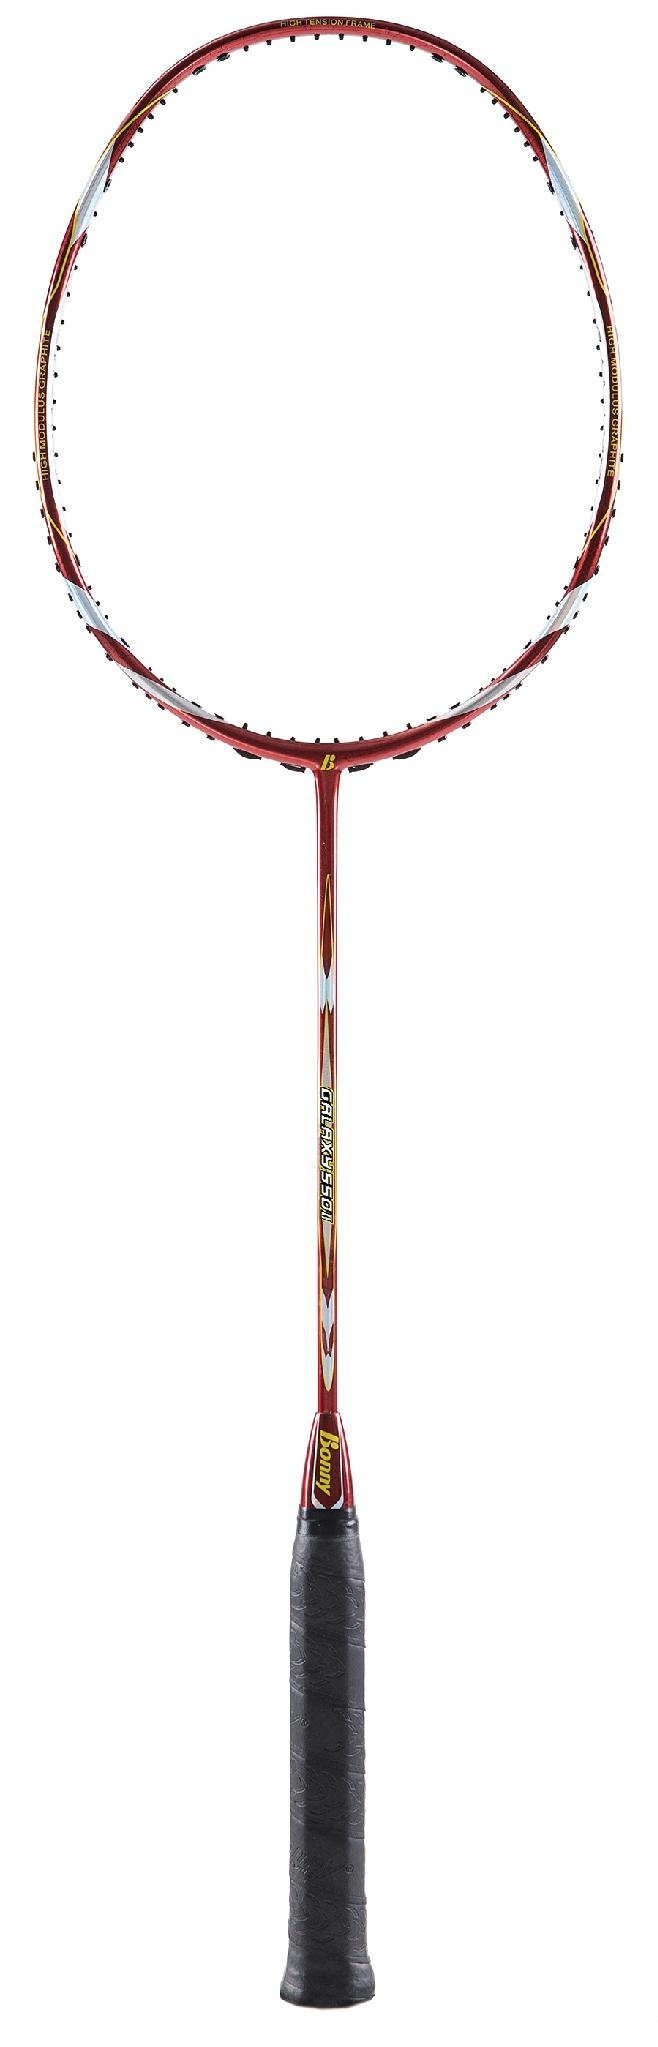 100% Carbon Fiber Badminton Racket_Galaxy 550 II